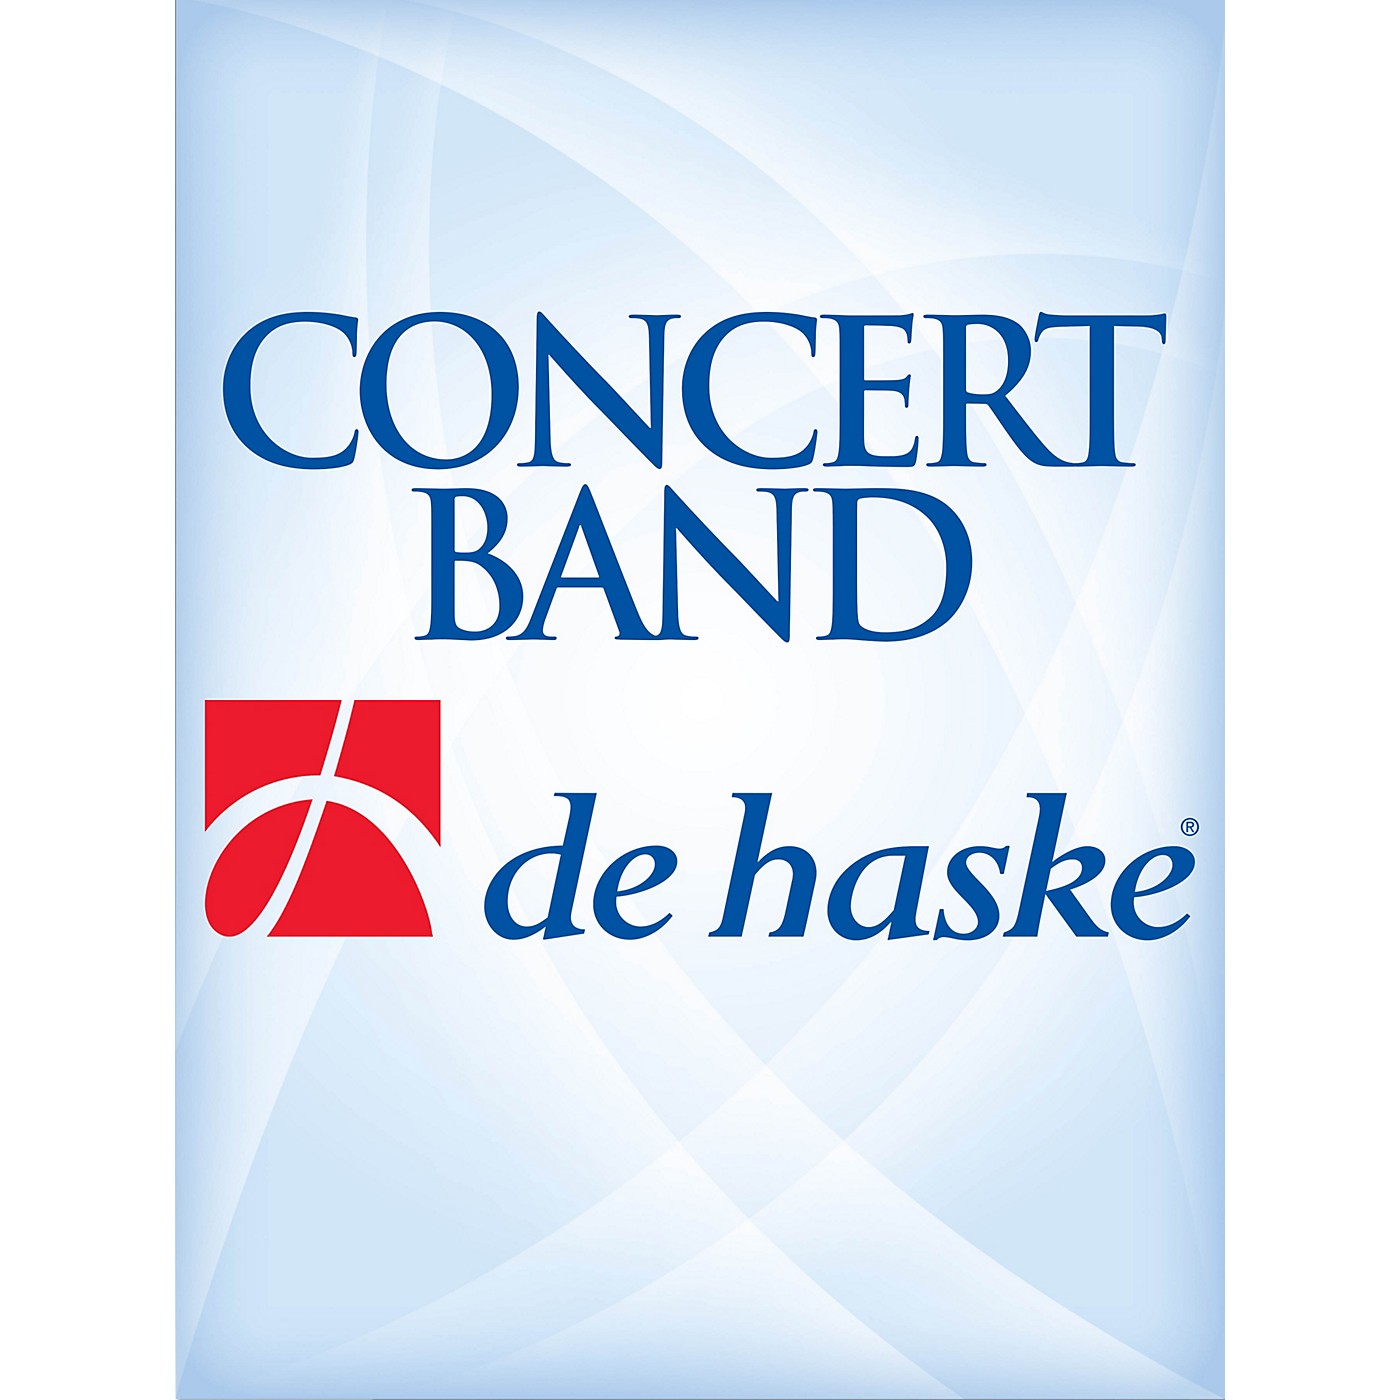 De Haske Music Intermezzo for Band (Concert Band - Grade 3 - Score and Parts) Concert Band Level 3 by Jan de Haan thumbnail